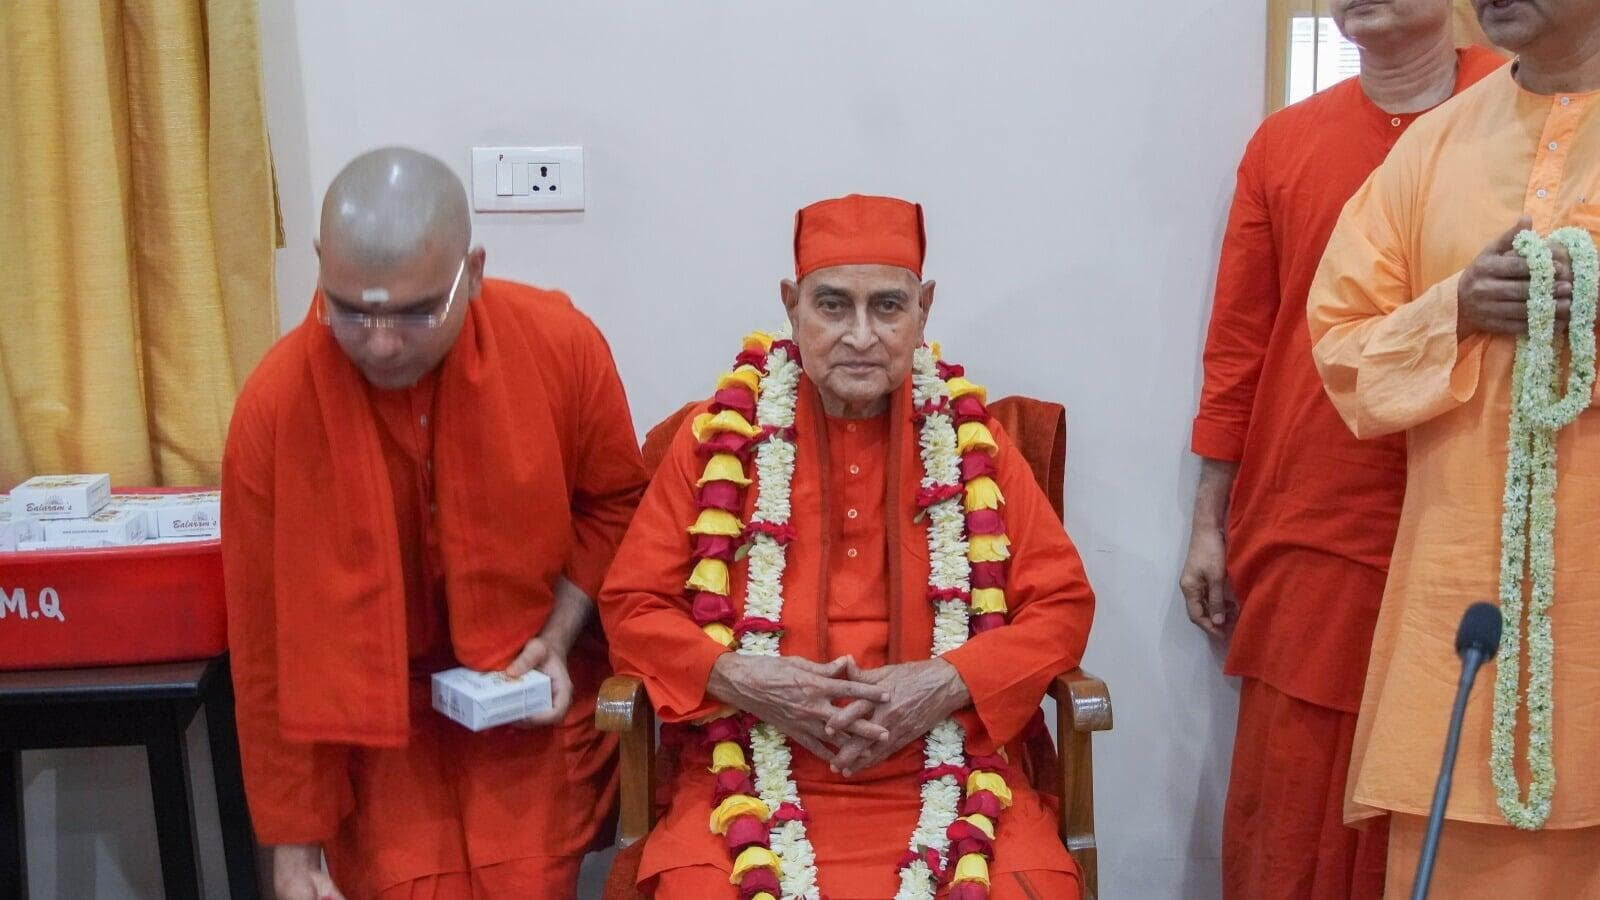 Most Revered Srimat Swami Gautamanandaji Maharaj Elected as
17th President of Ramakrishna Order